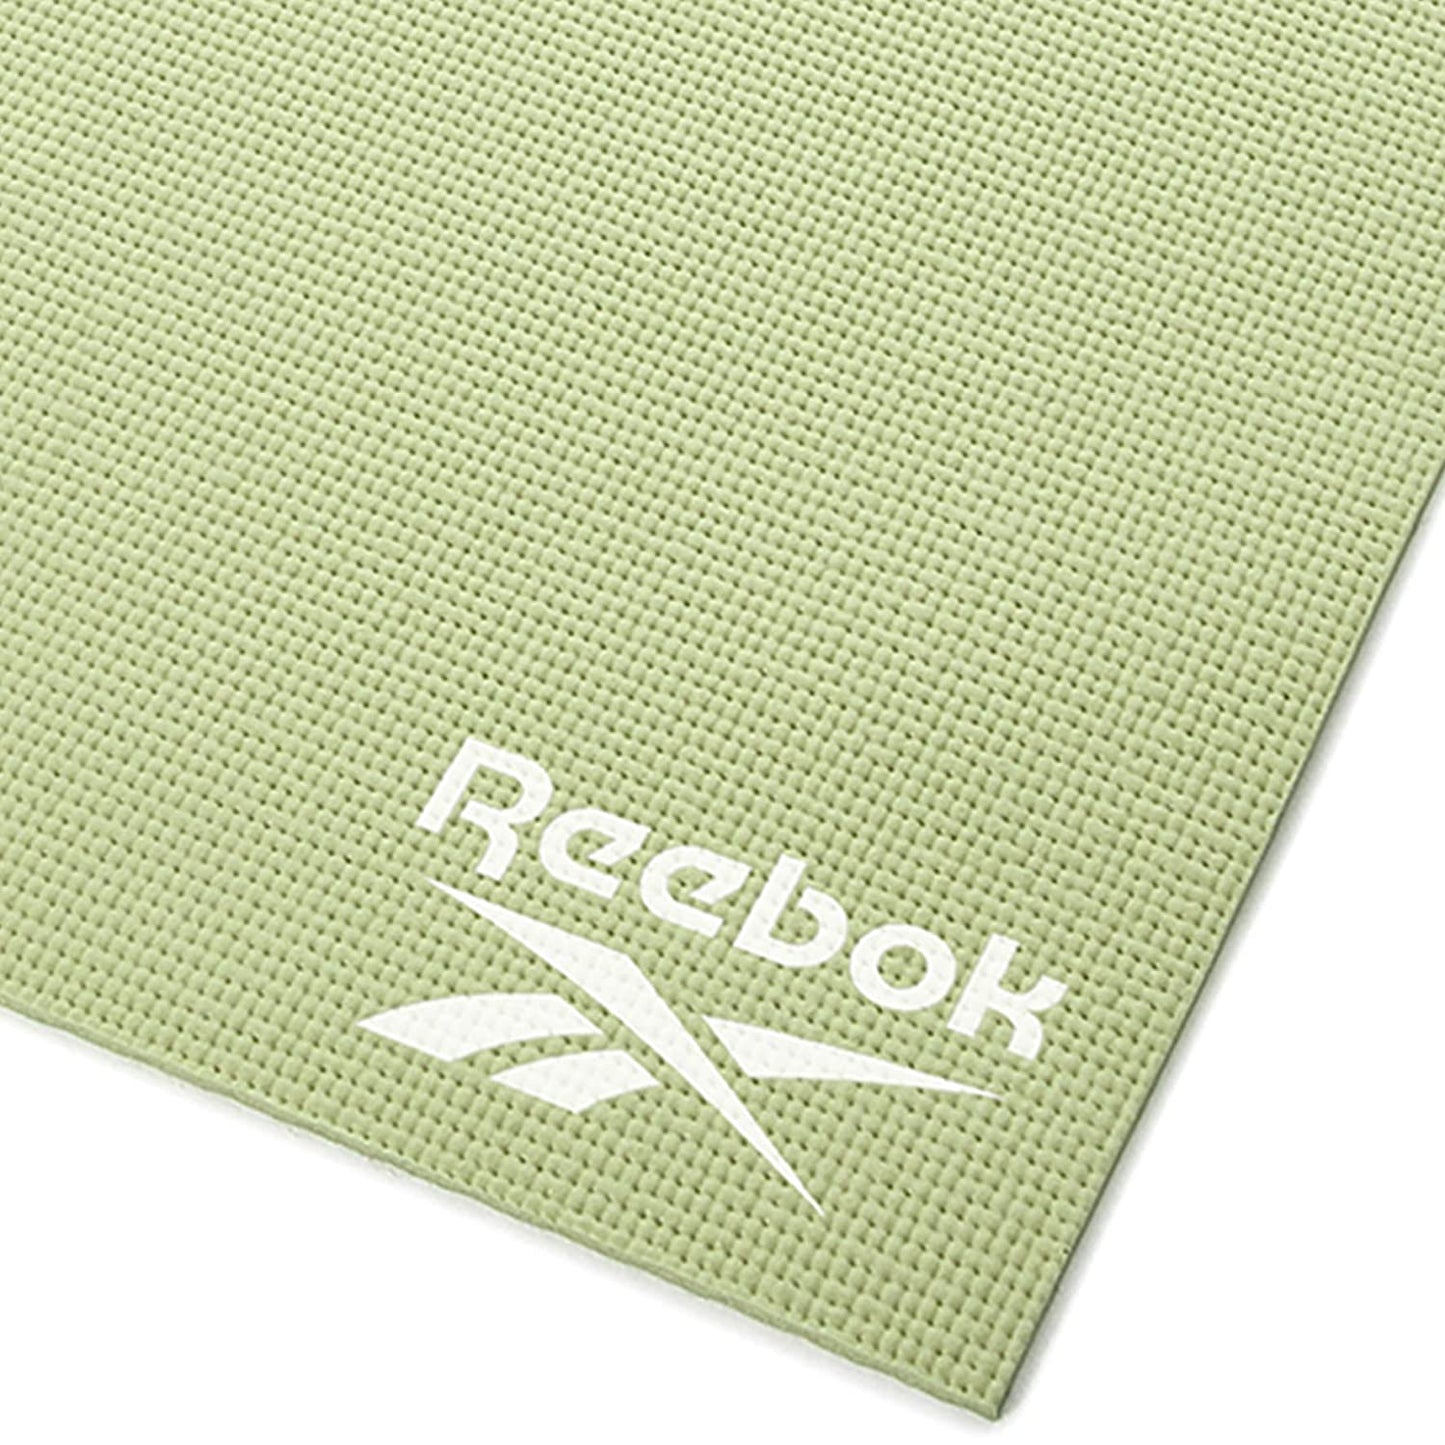 Reebok RAYG-11022 Yoga Mat - 4mm (173x61cm) - Best Price online Prokicksports.com